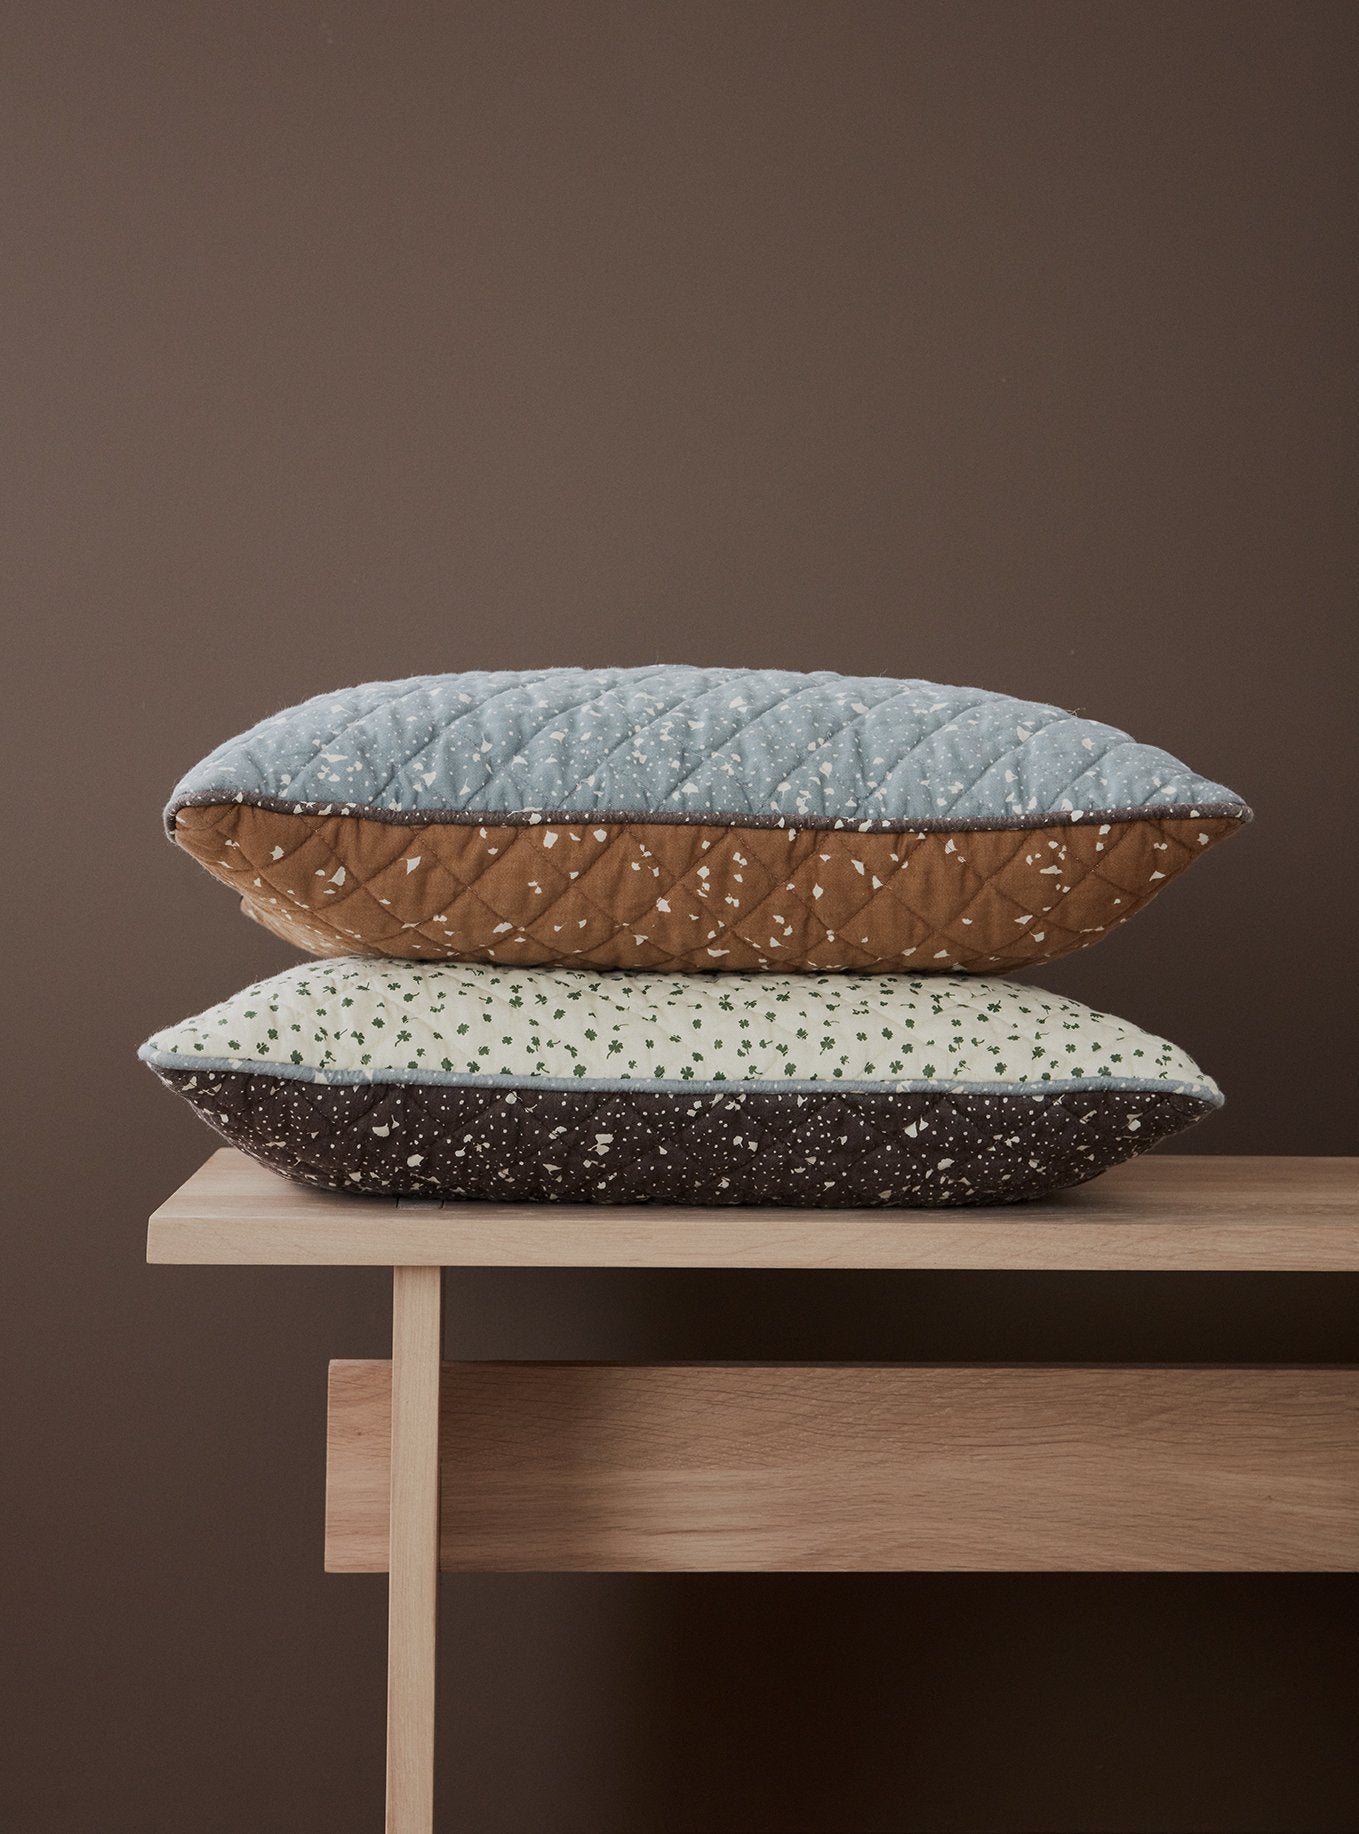 OYOY Living Design - OYOY LIVING Cushion Aya Quilted Cushion 307 Caramel / Blue